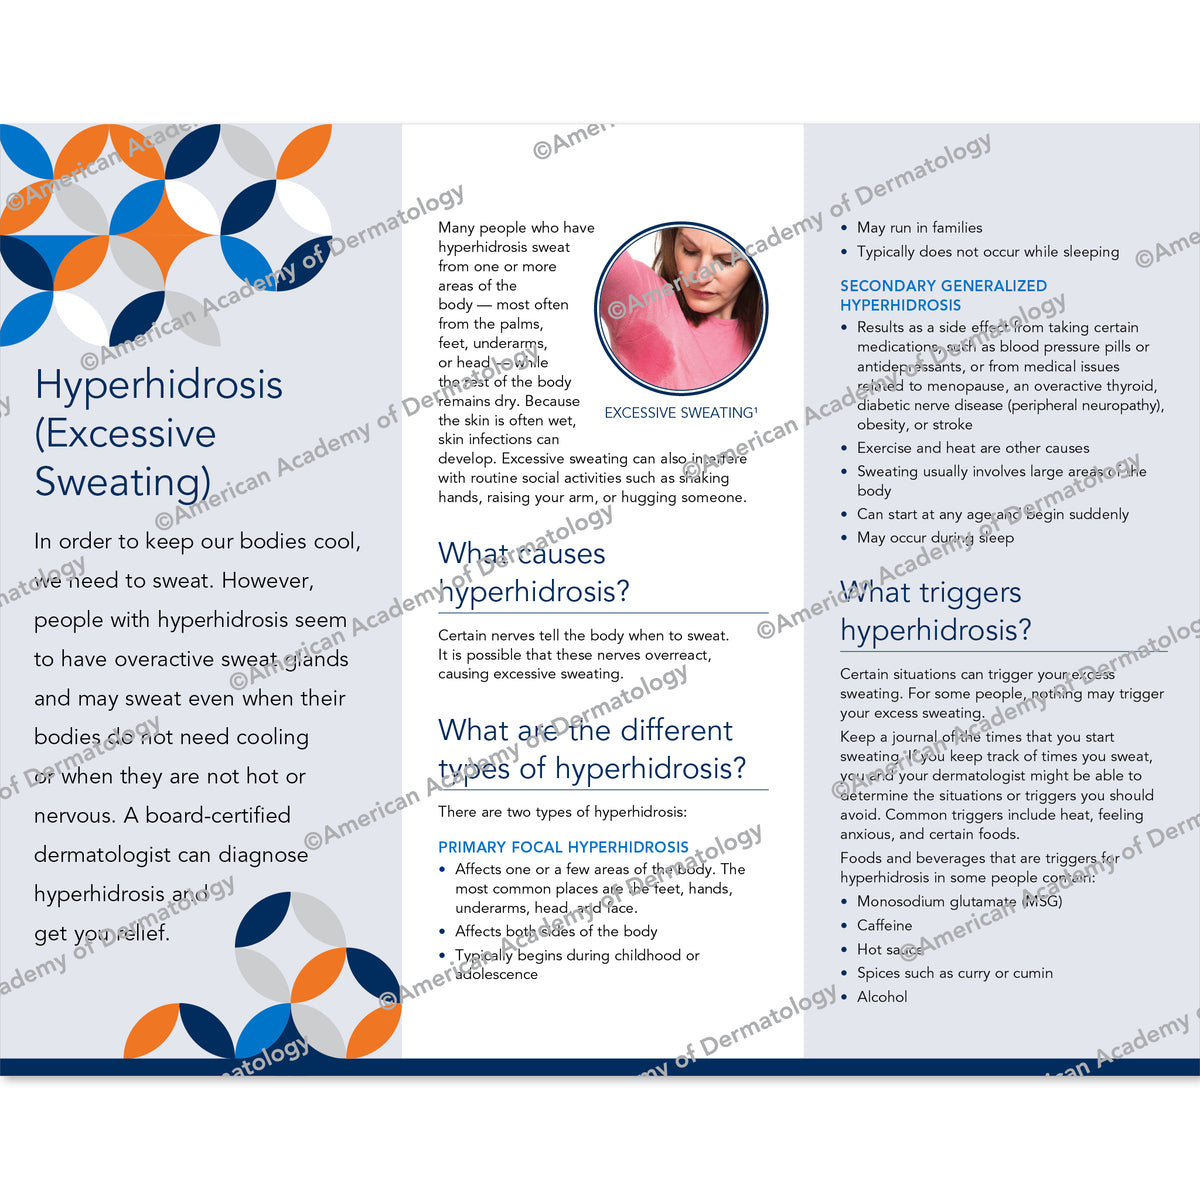 Hyperhidrosis (Excessive Sweating)